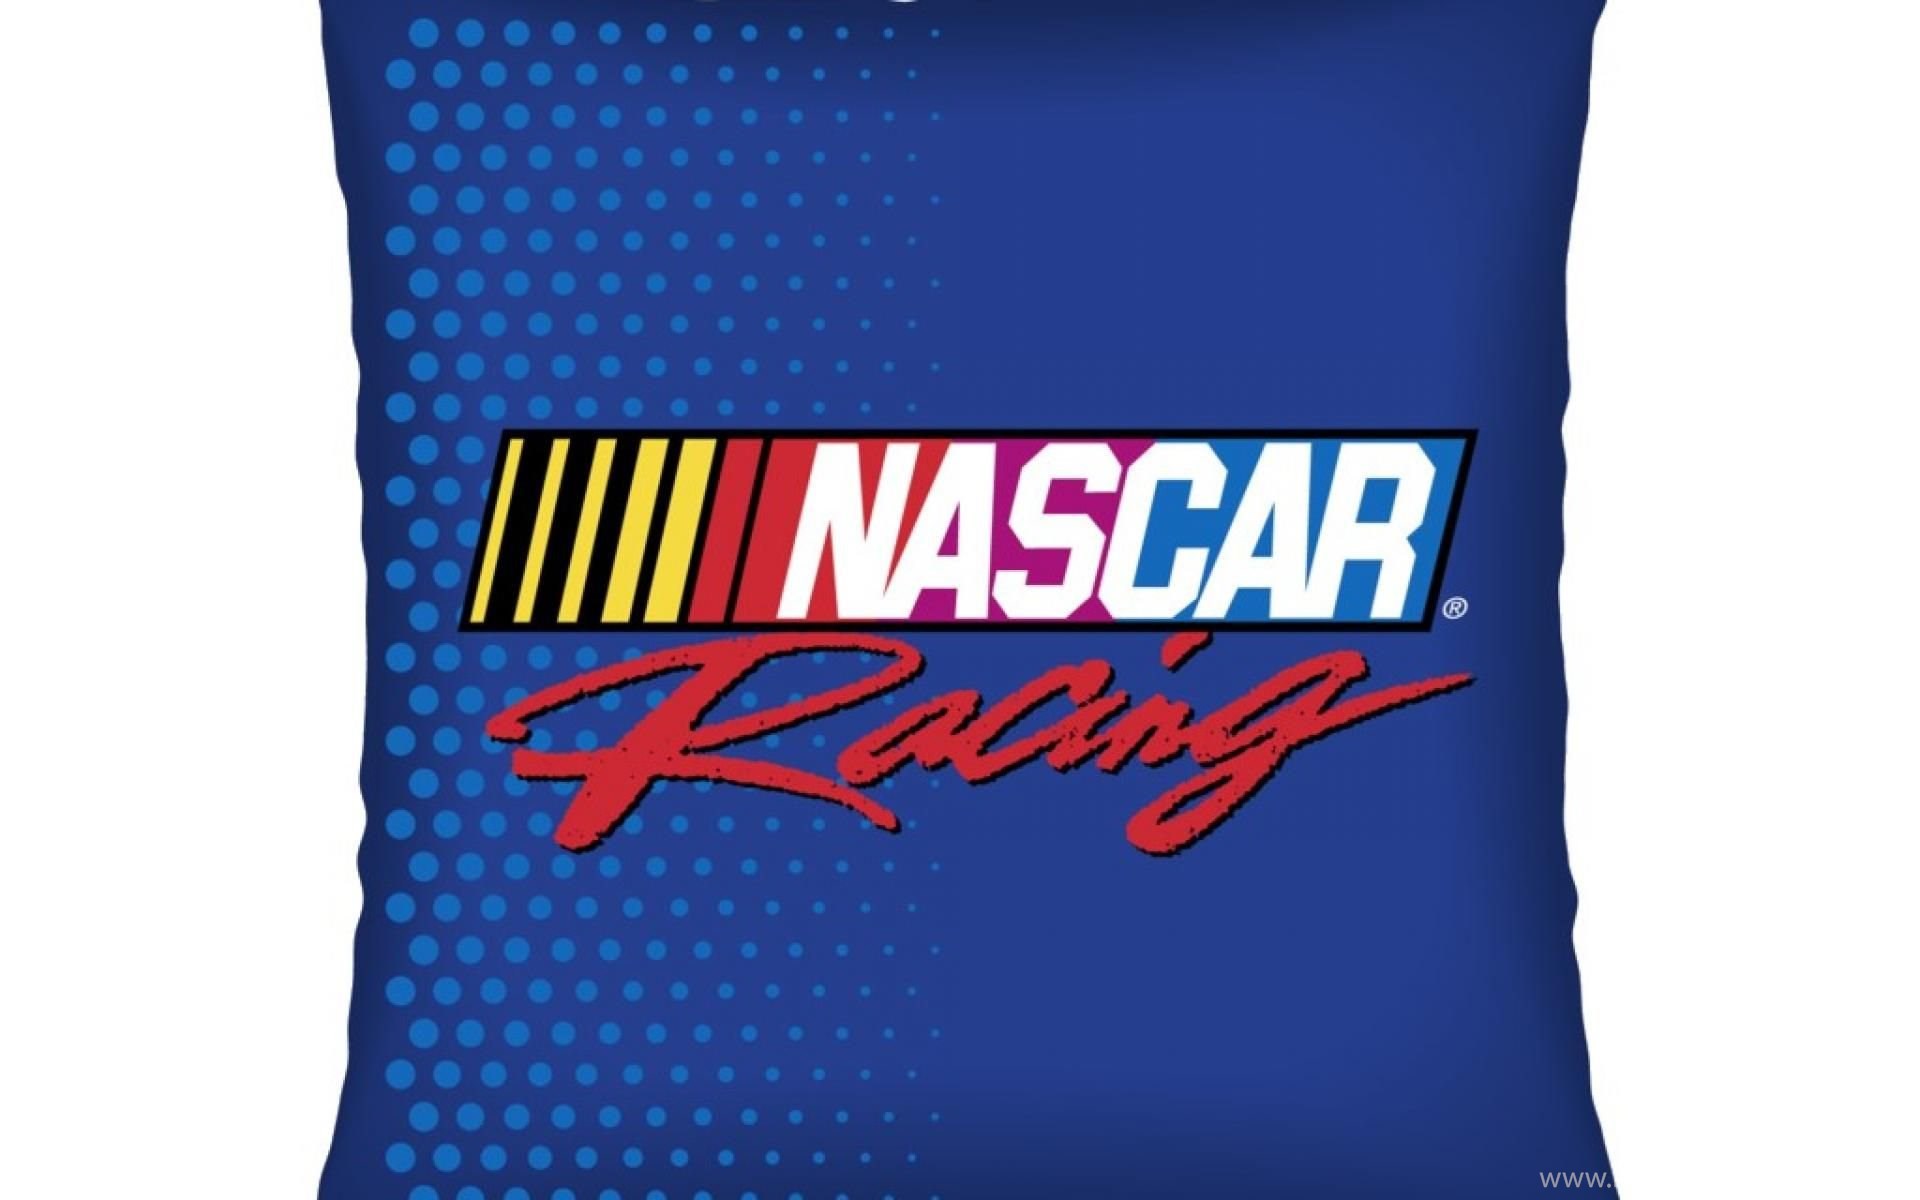 NASCAR RACING LOGO WALLPAPER Desktop Background